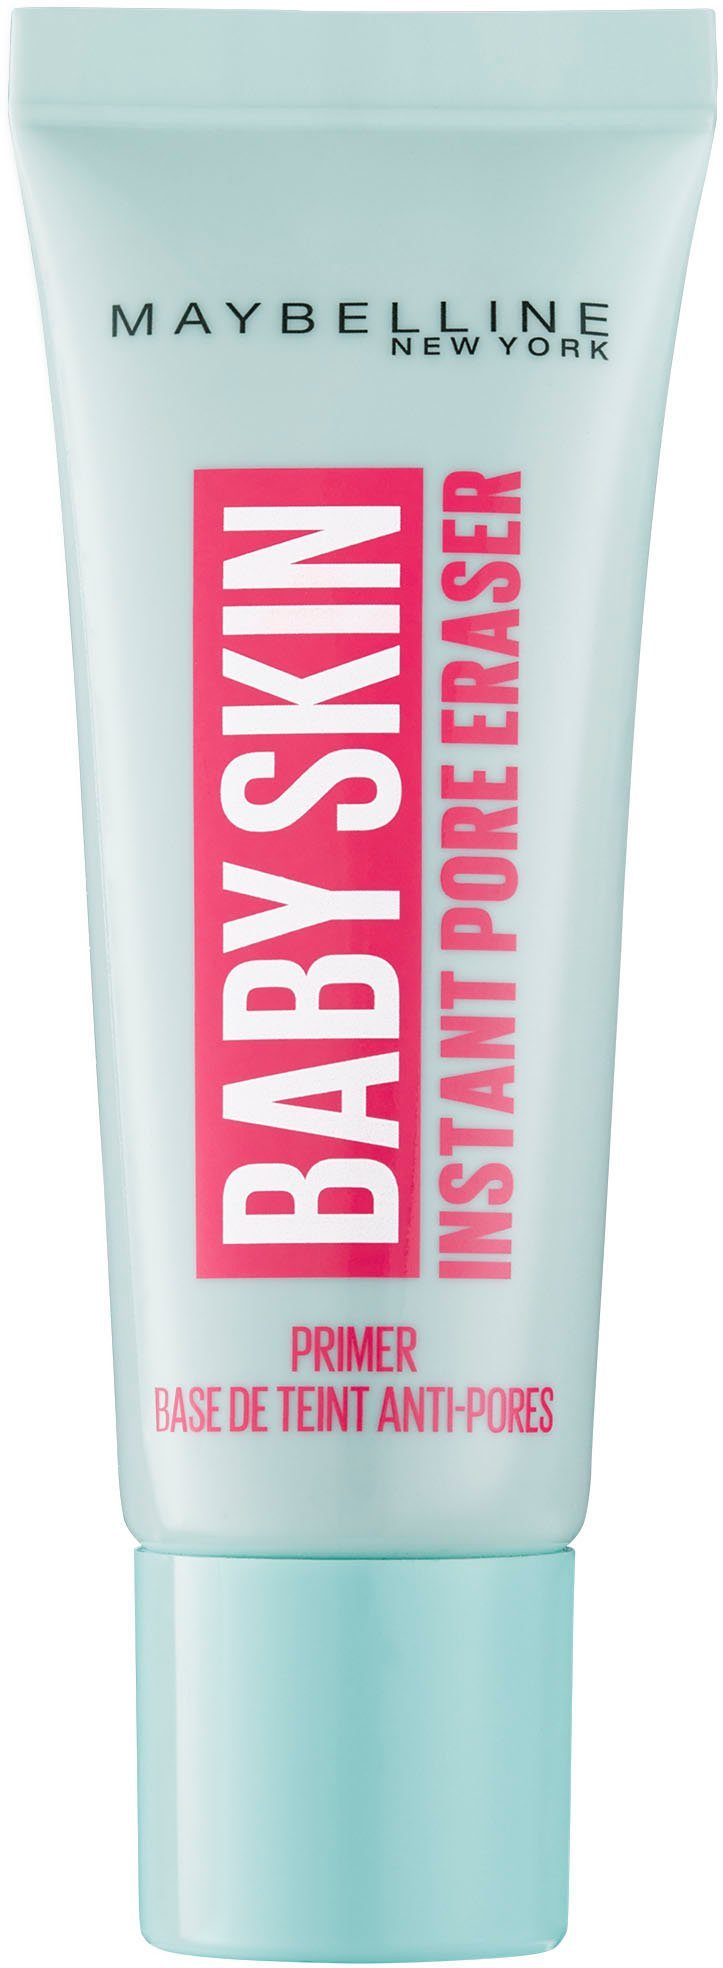 Skin YORK Primer MAYBELLINE Baby NEW